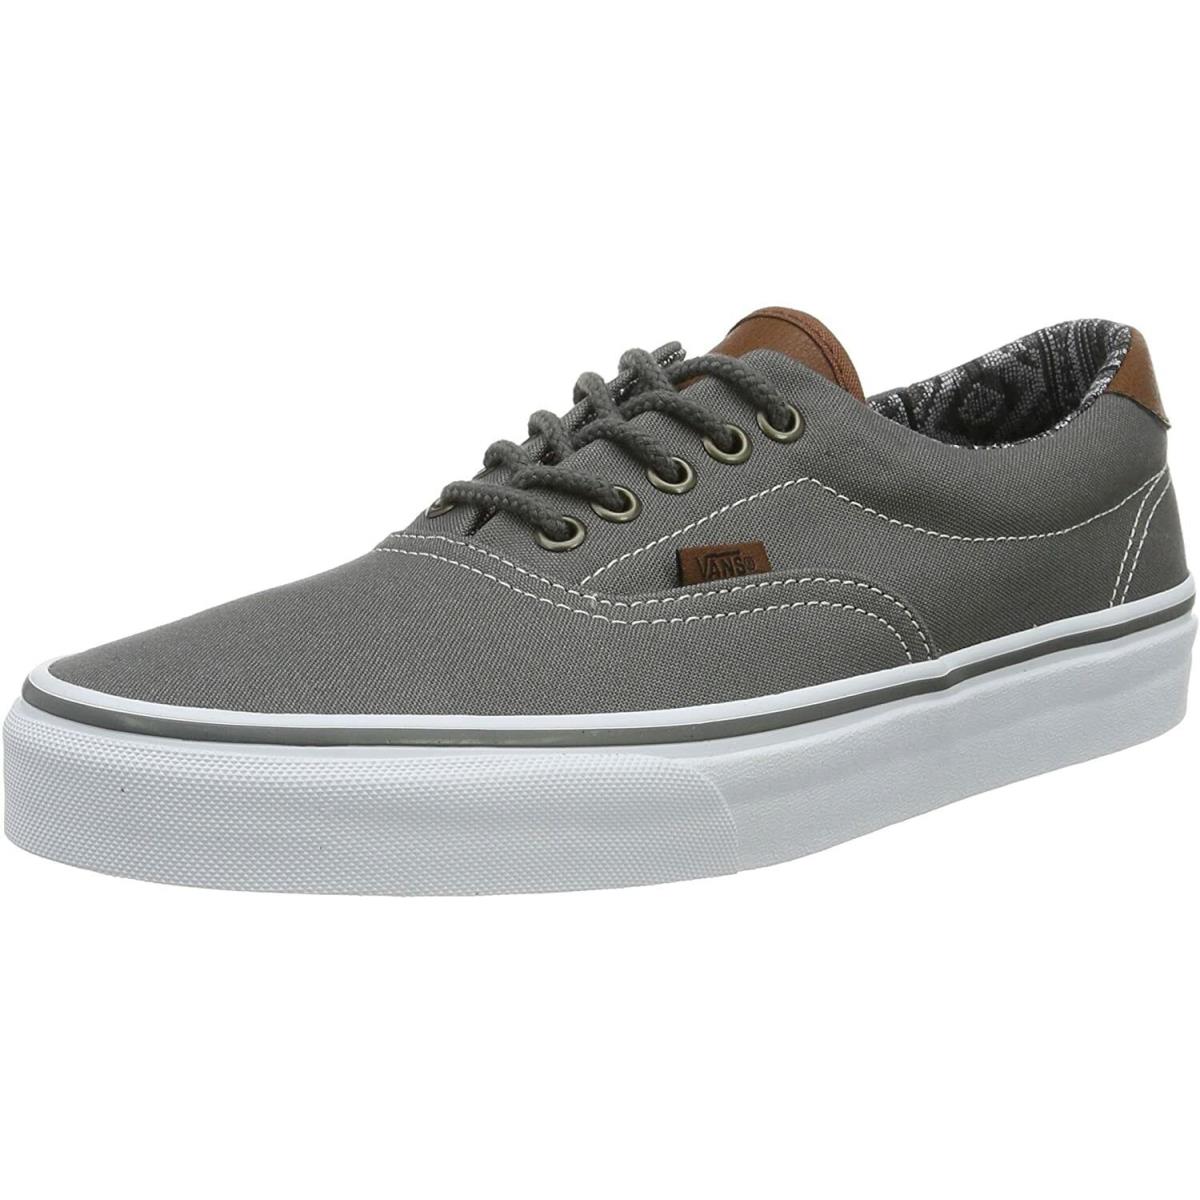 Vans Era 59 C L Pewter Italian Weave Mens Skate Shoes Size 7 7.5 9